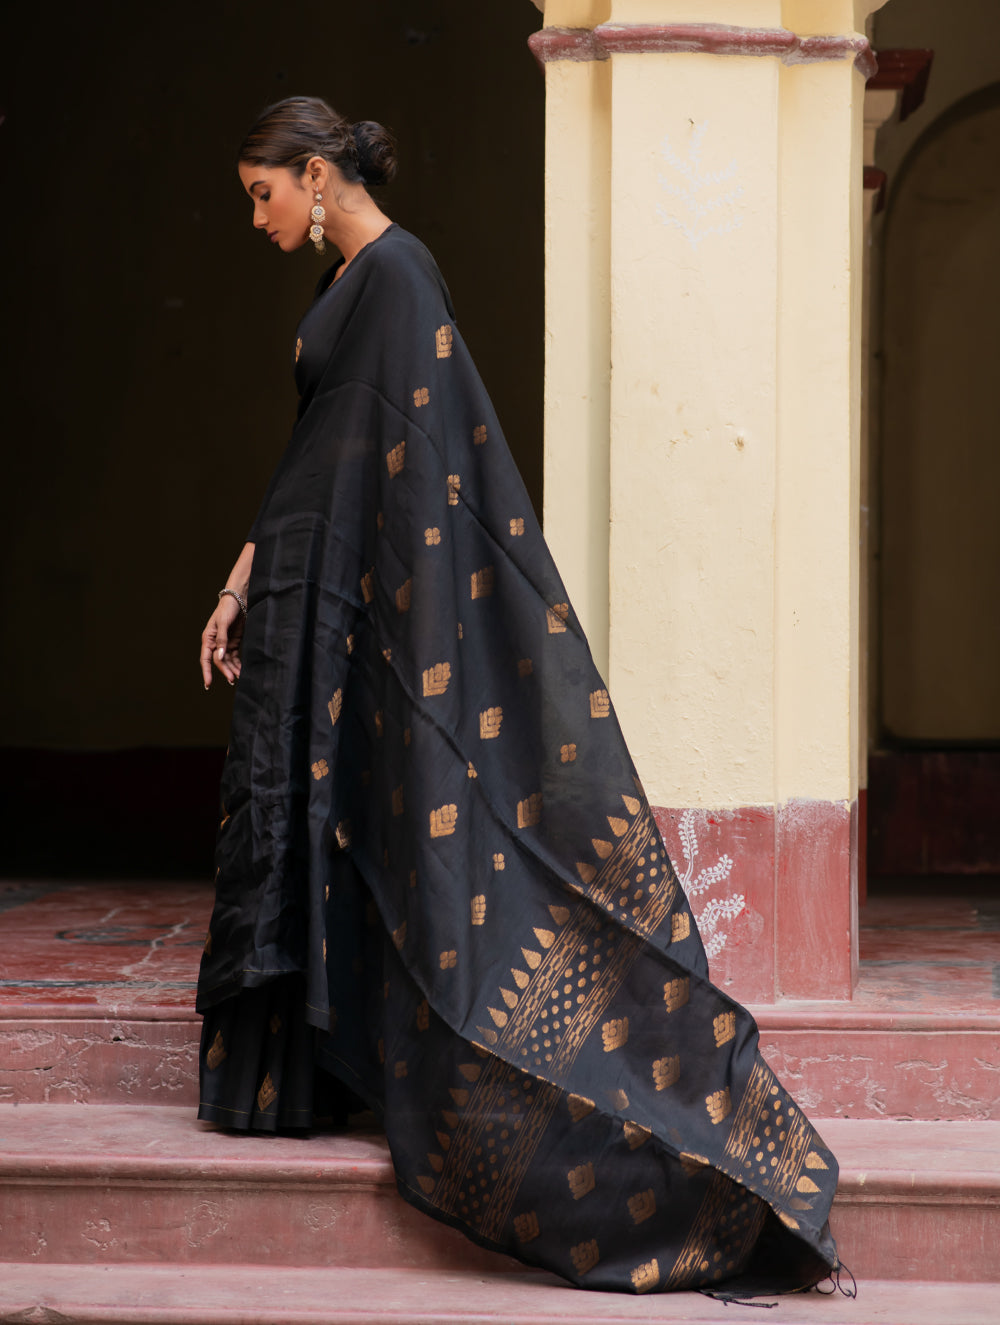 Load image into Gallery viewer, Handwoven Elegance. Exclusive Linen Jamdani Saree - Black Appeal